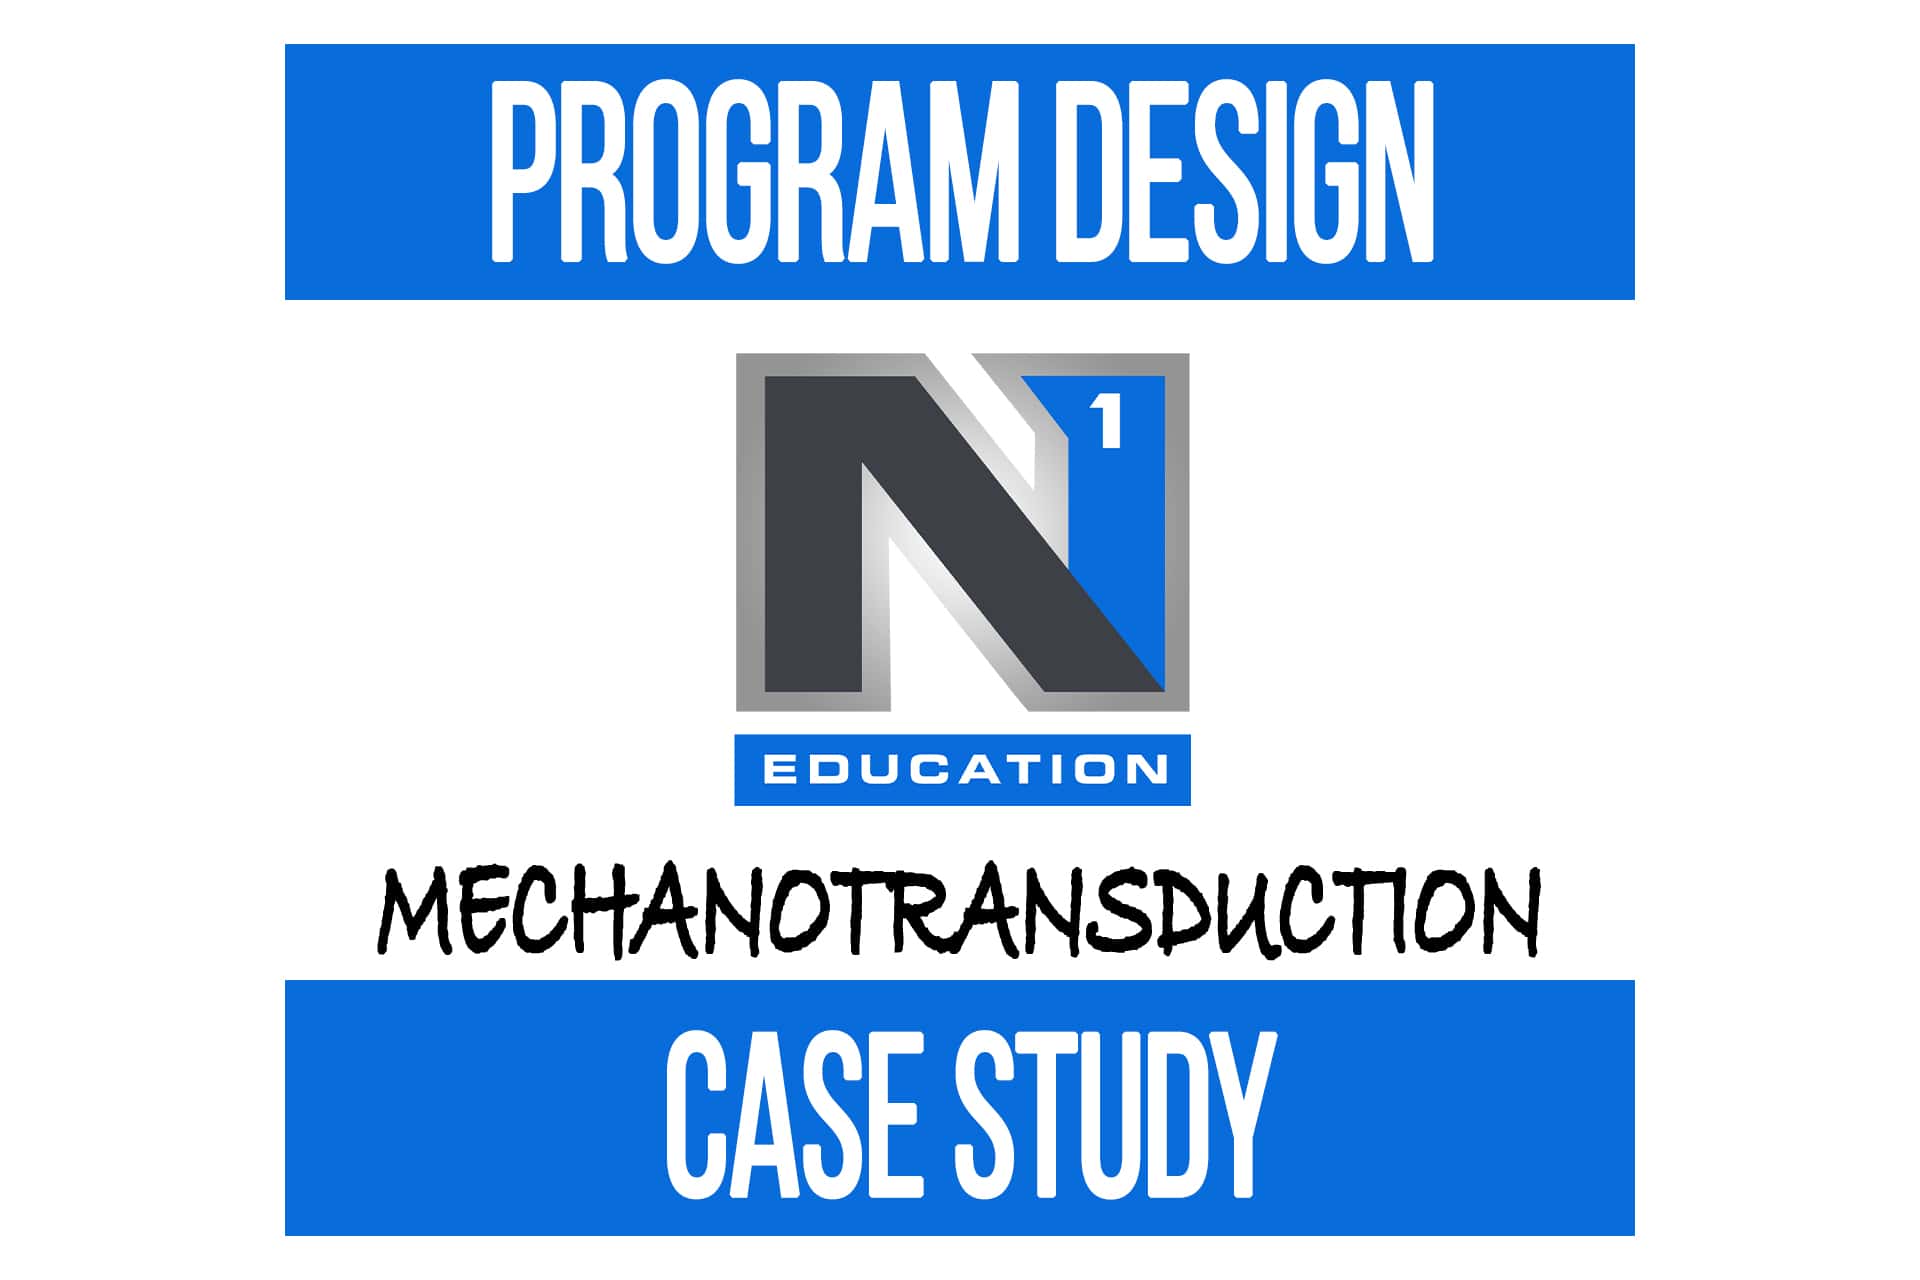 Program Design Case Study: Mechanotransduction